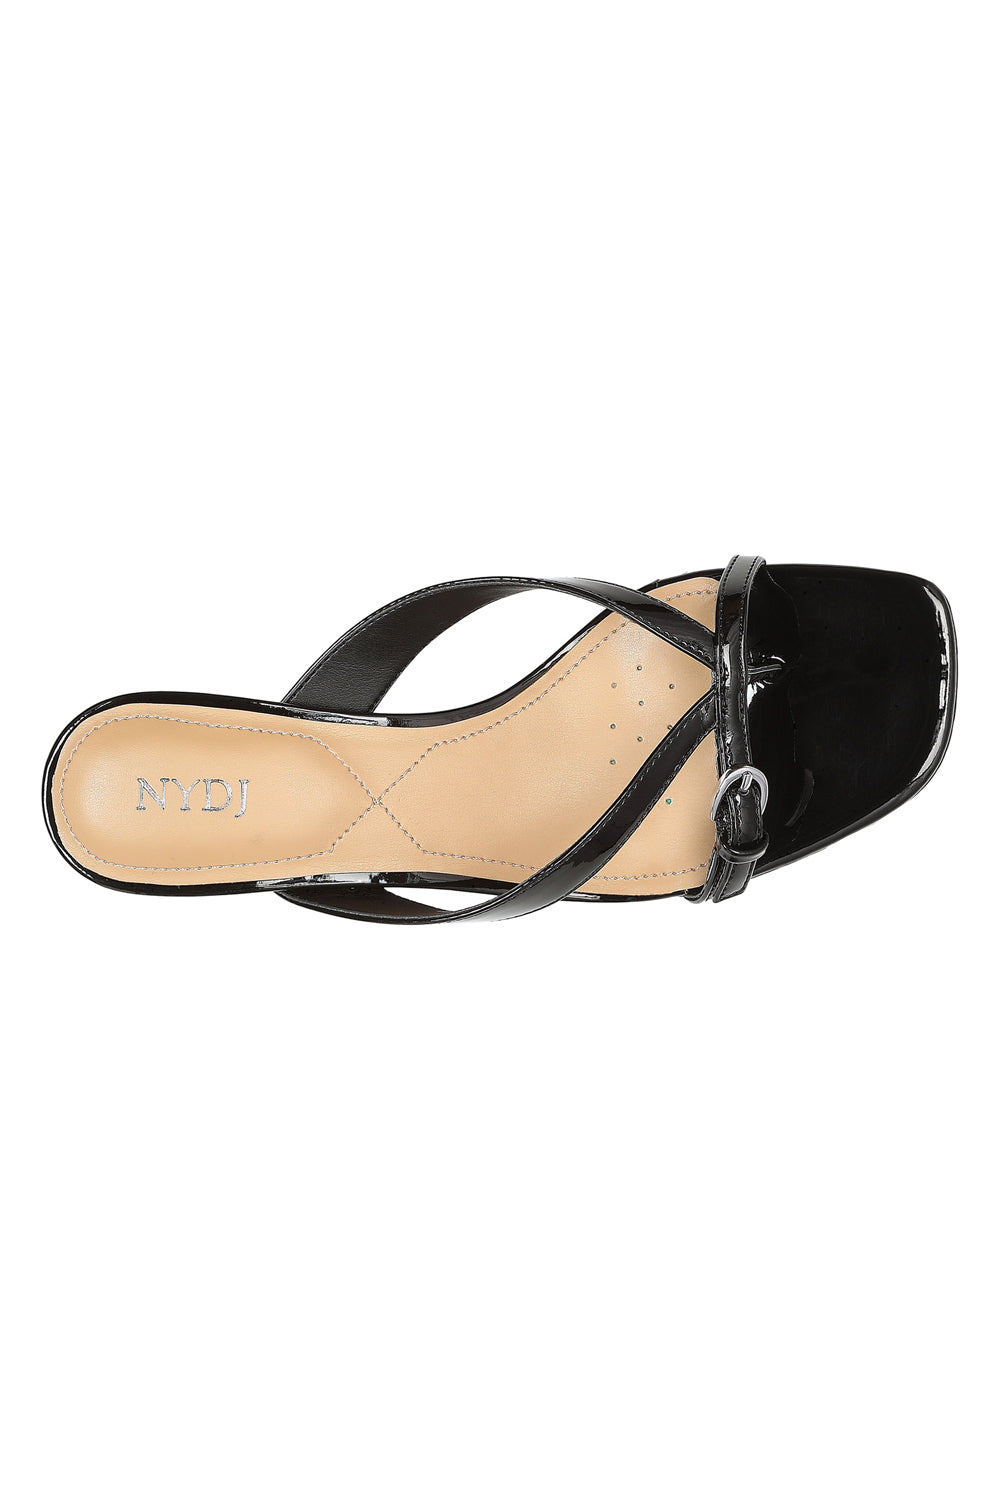 NYDJ Glam Block Heel Sandals In Wide Width In Patent - Black